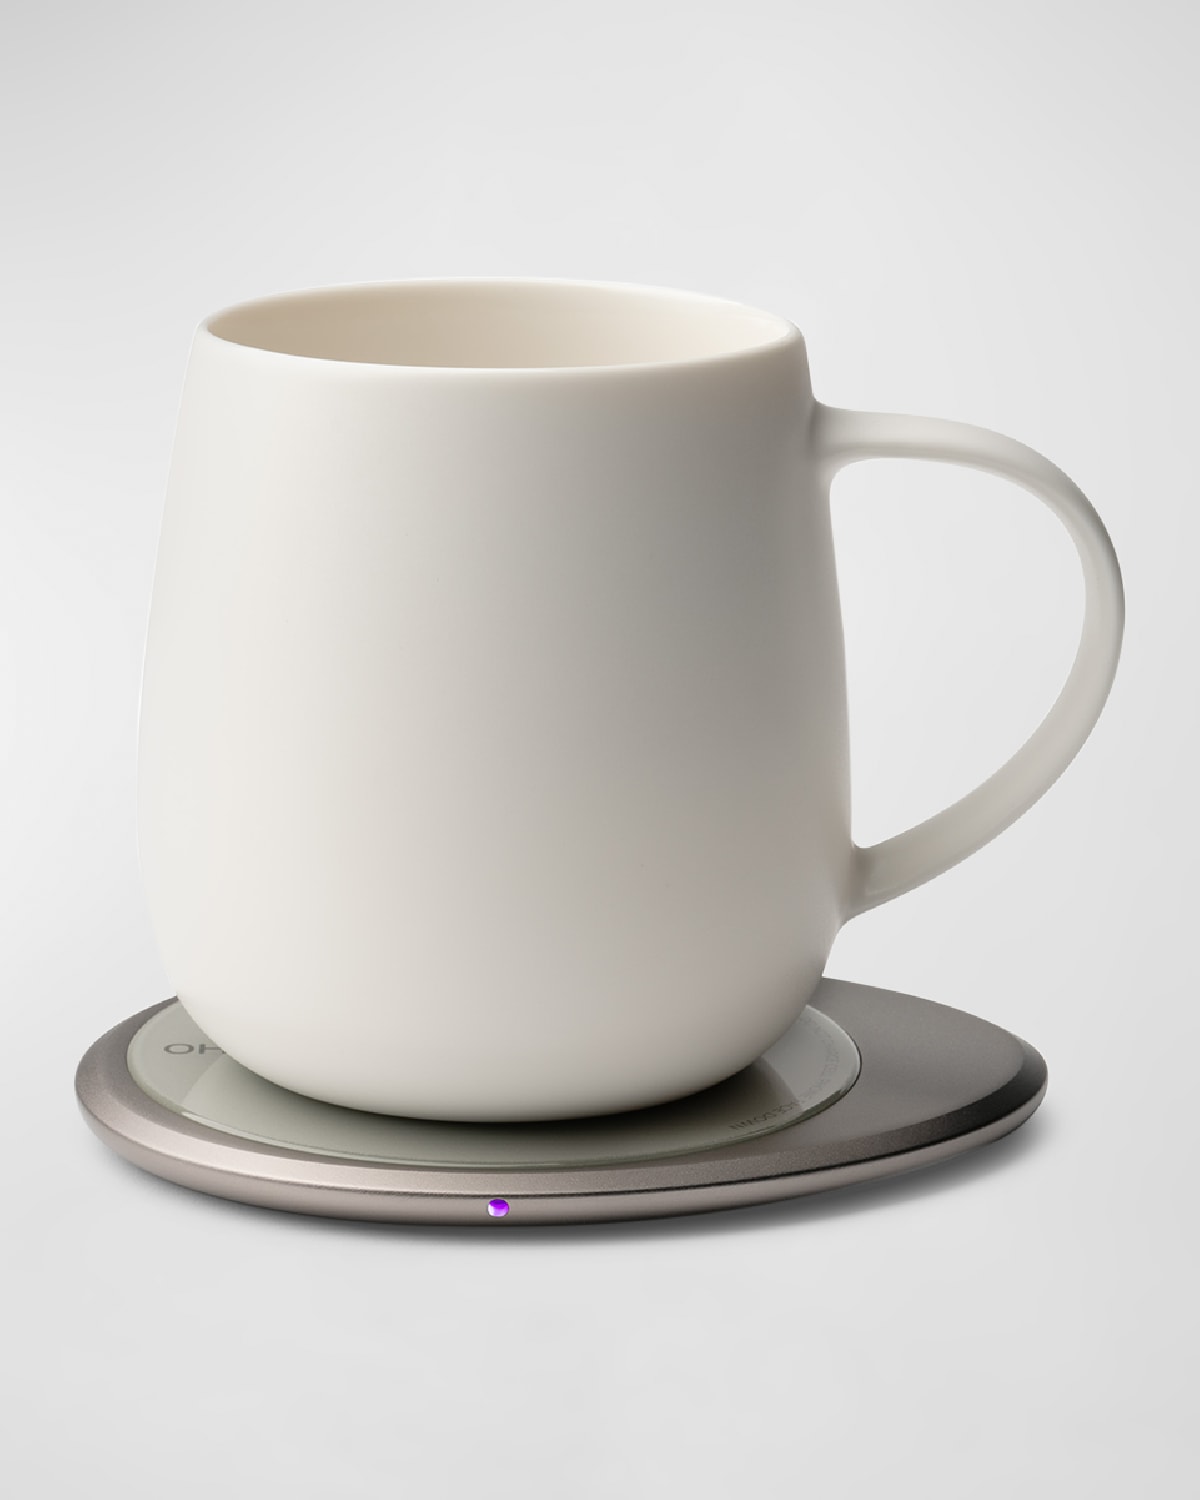 Ohom Ui Self-heating Ceramic Mug In Jasmine White